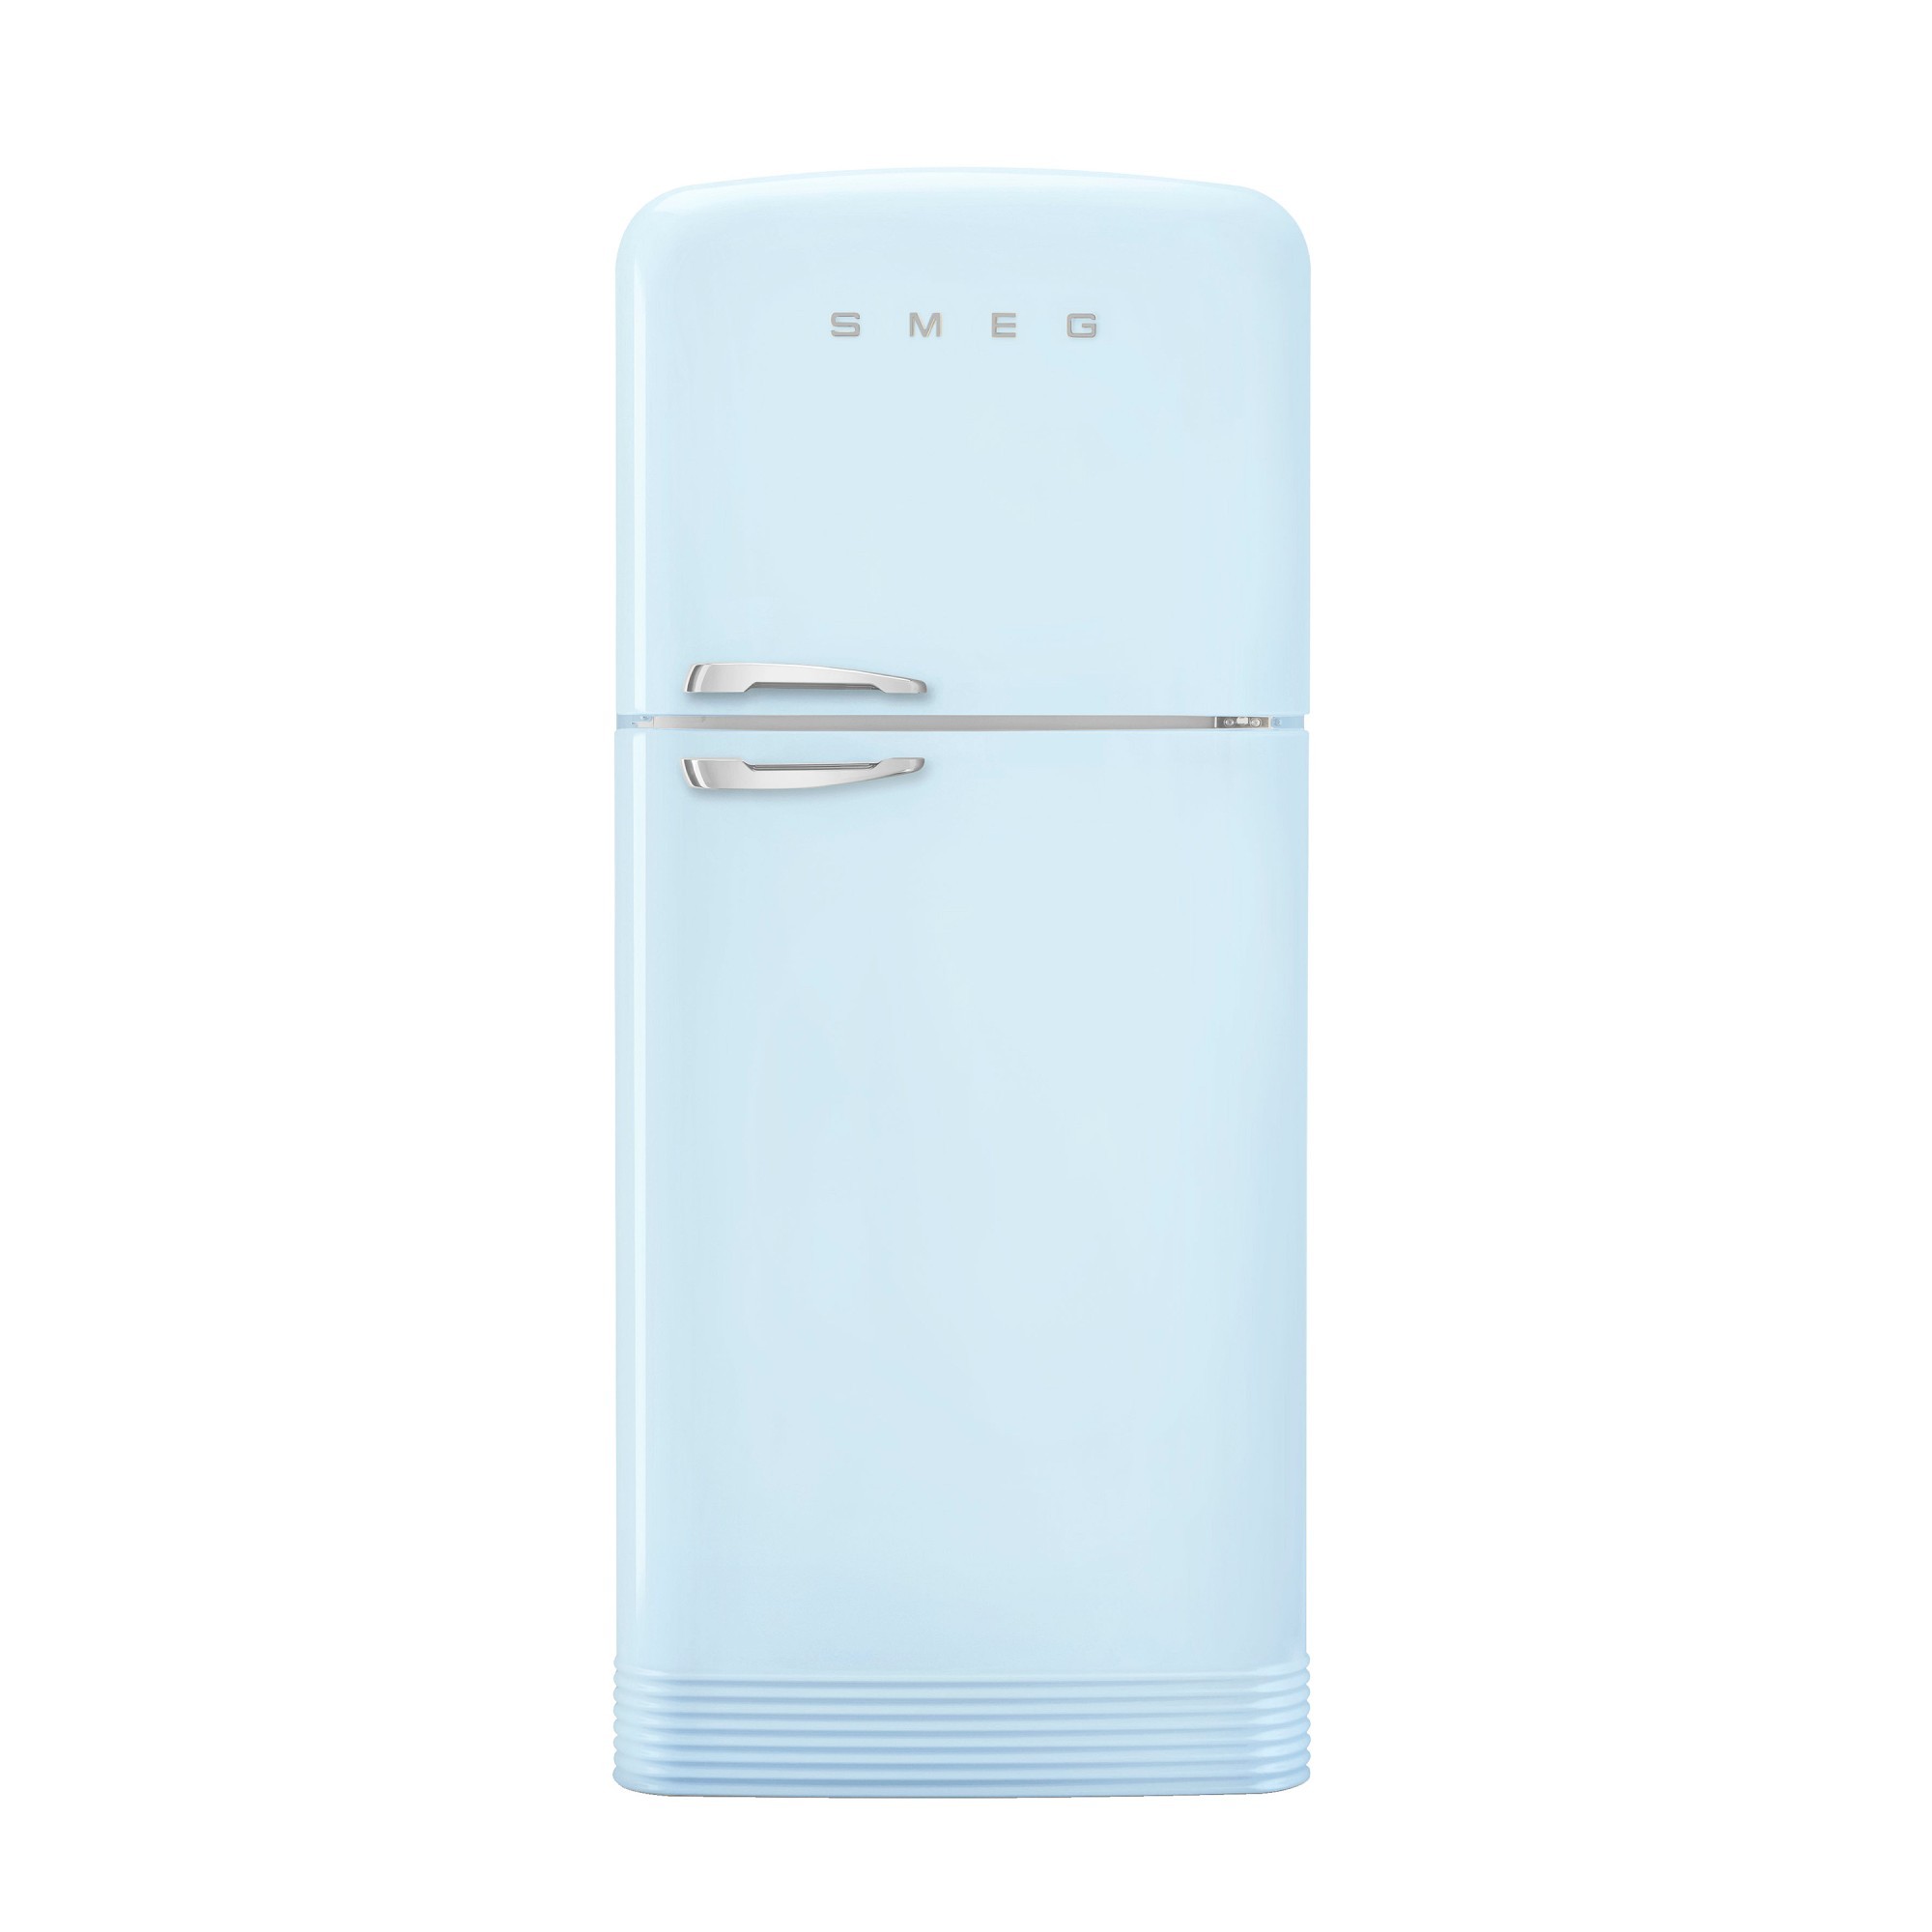 SMEG FAB 50 Refrigerator in Pastel Blue